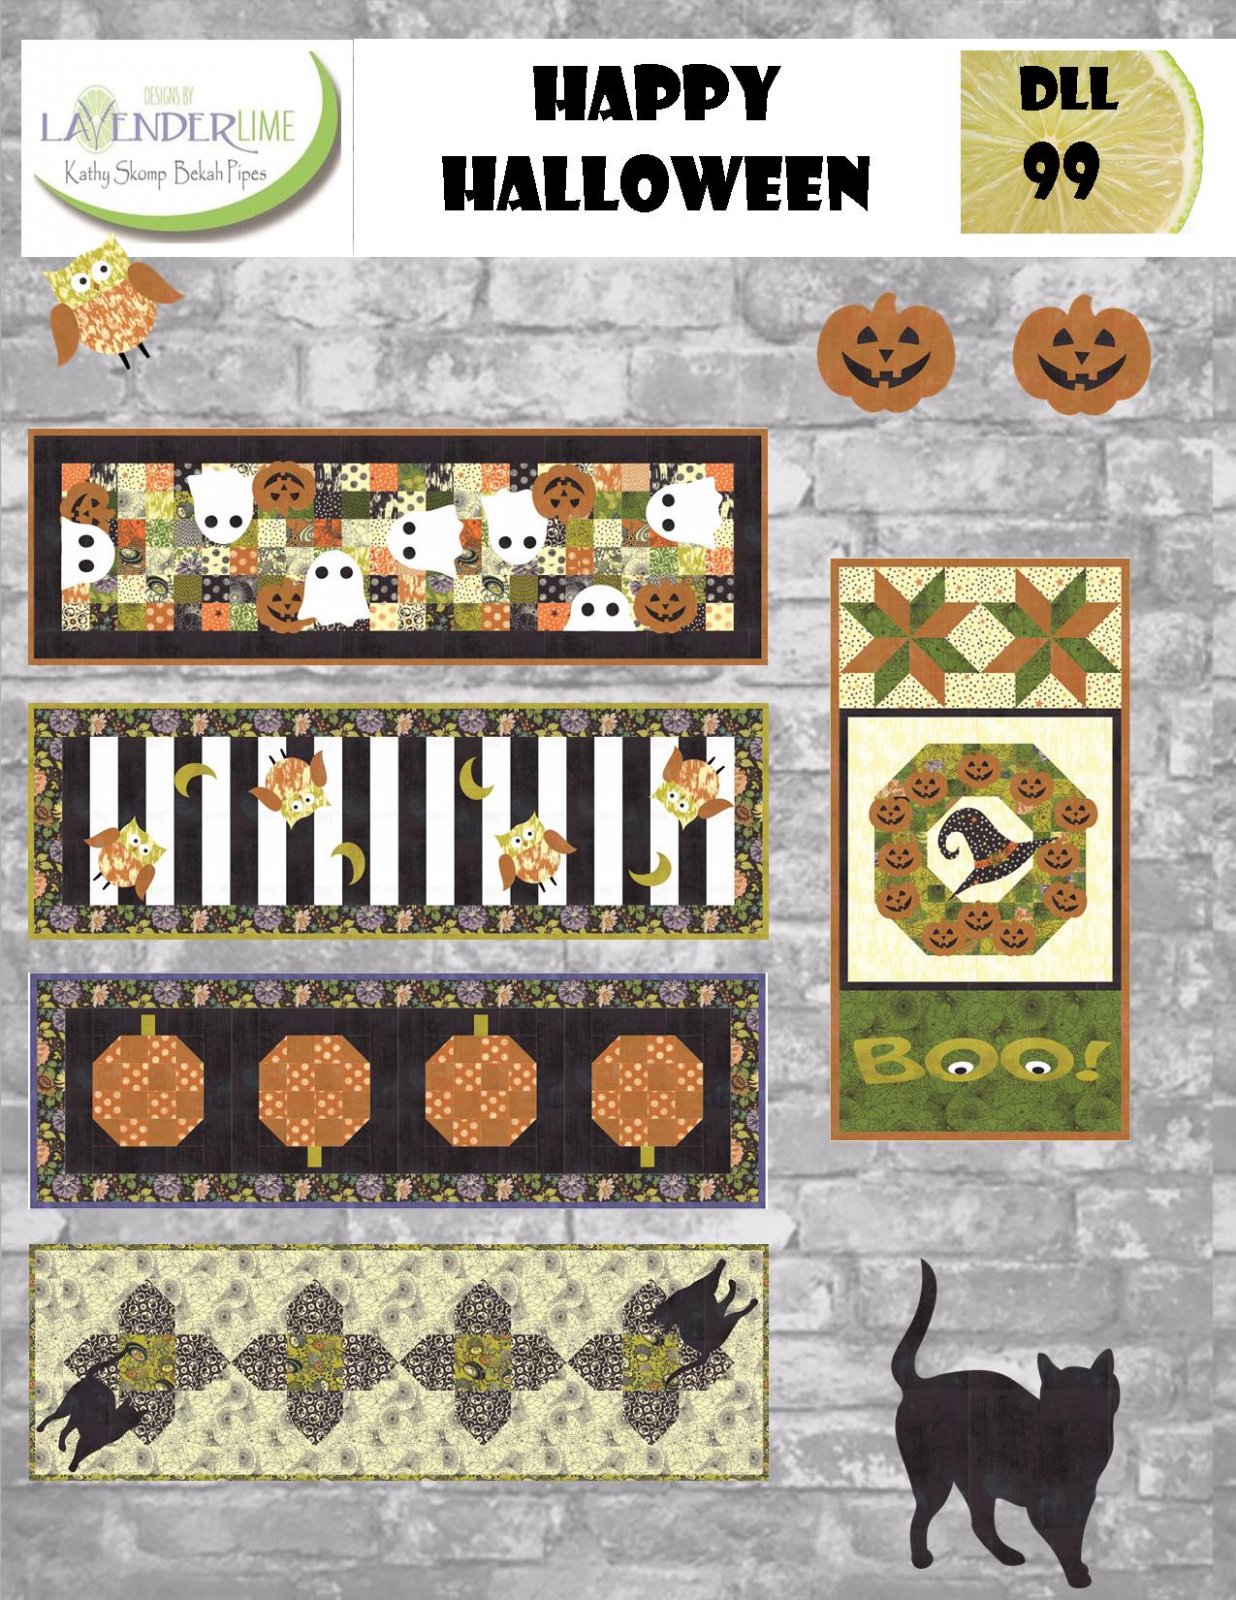 Happy Halloween PDF Download